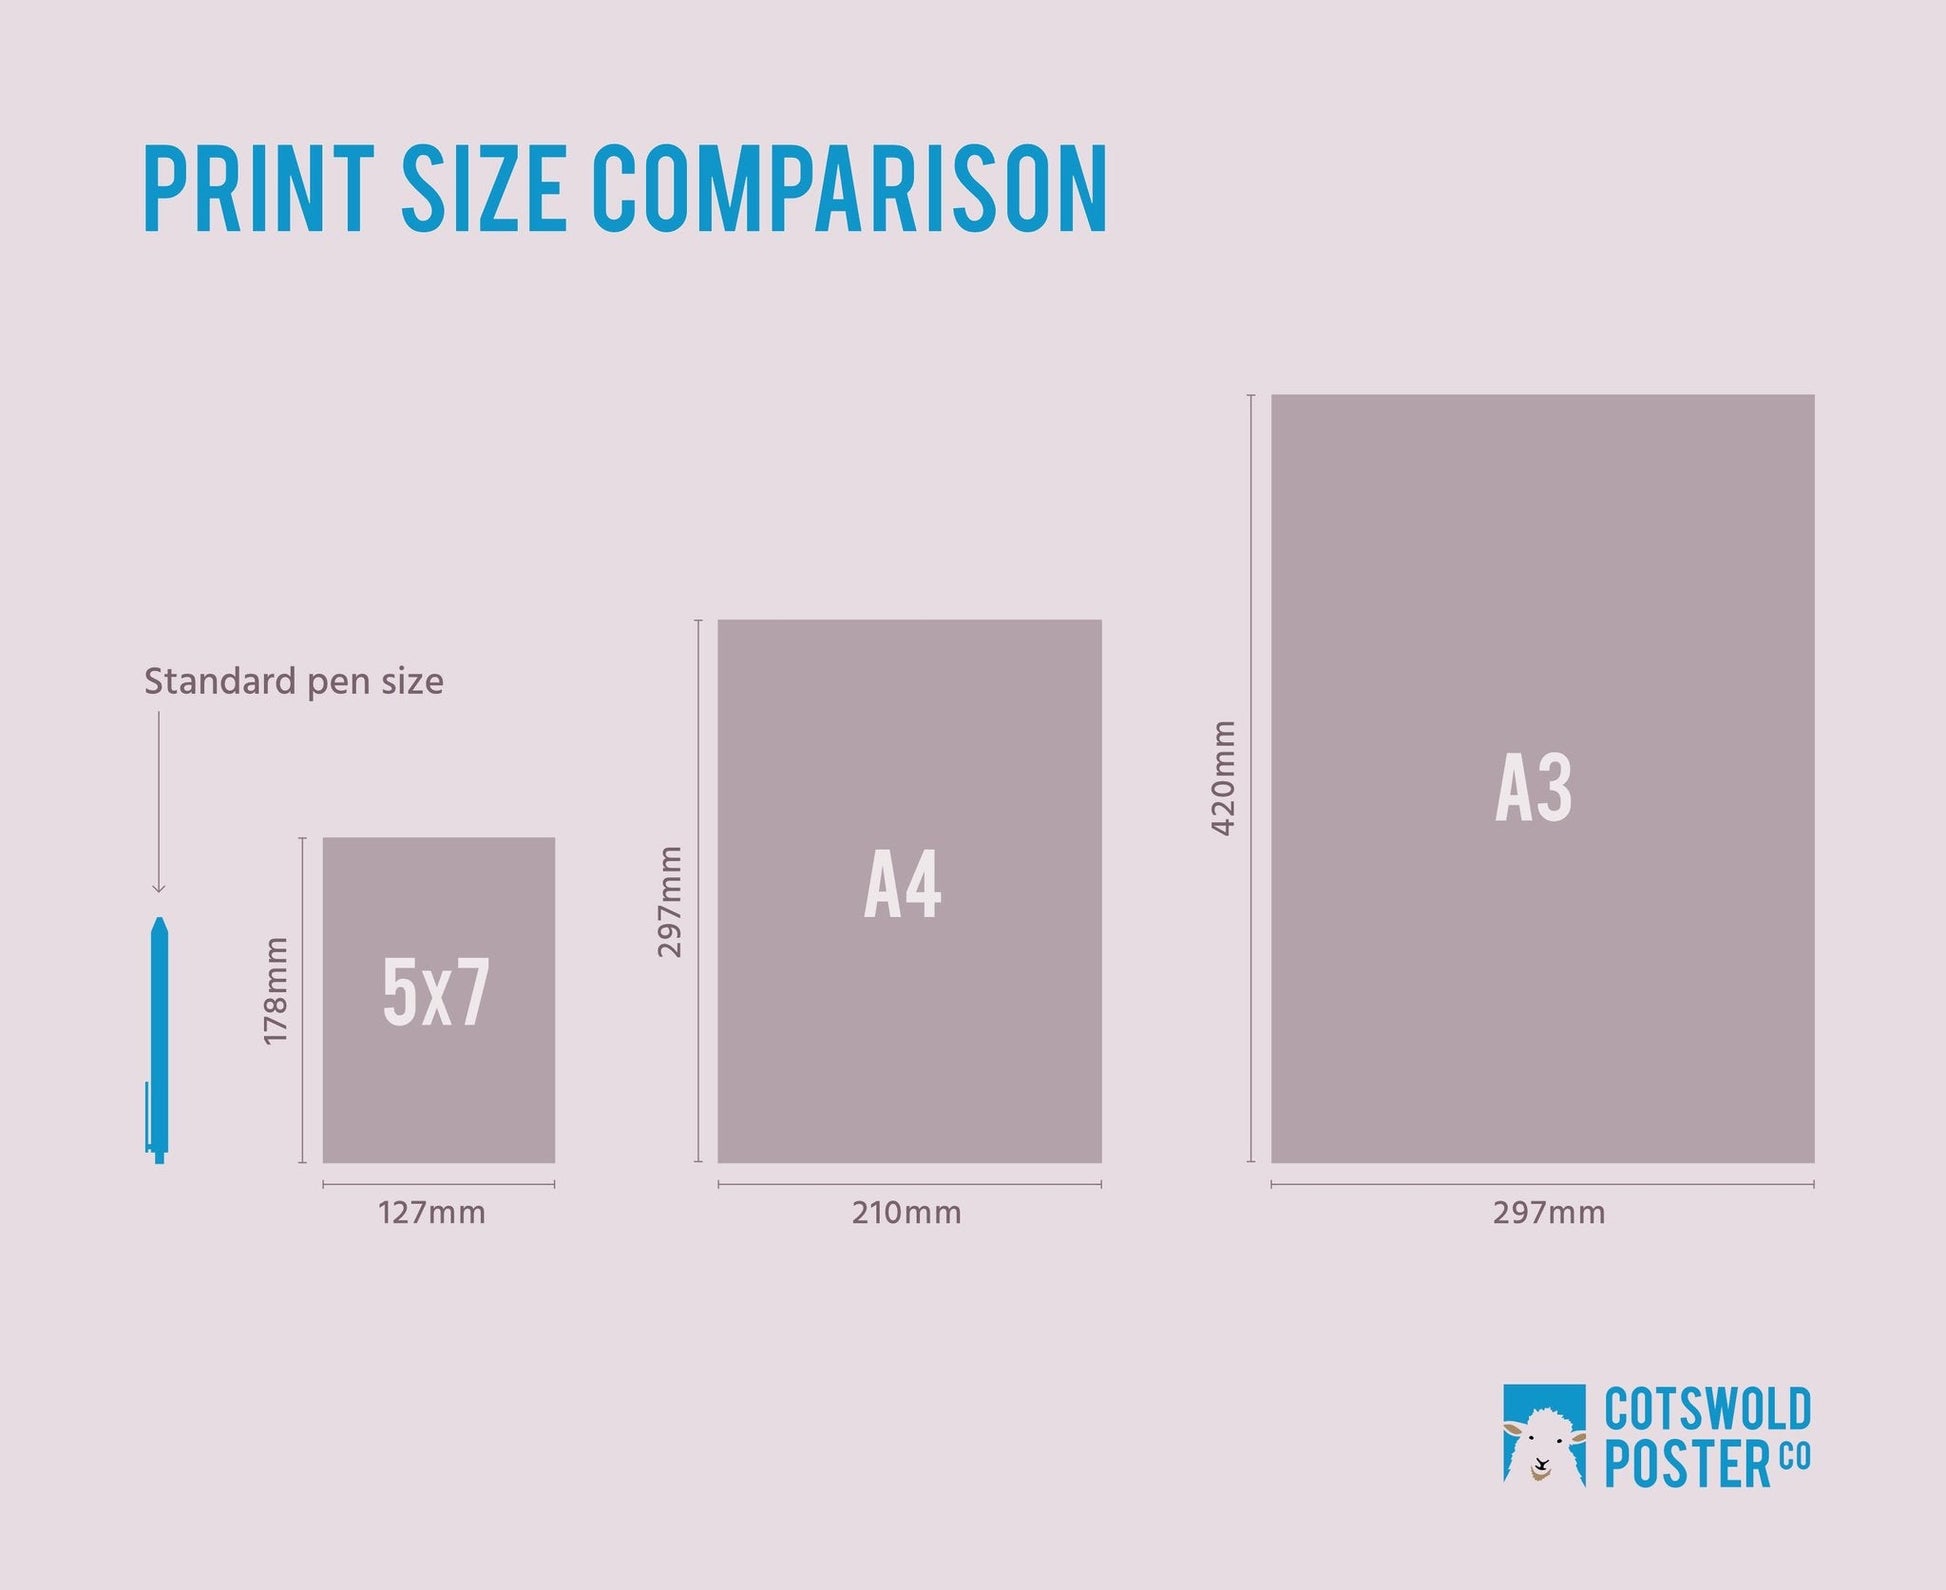 Print size comparison